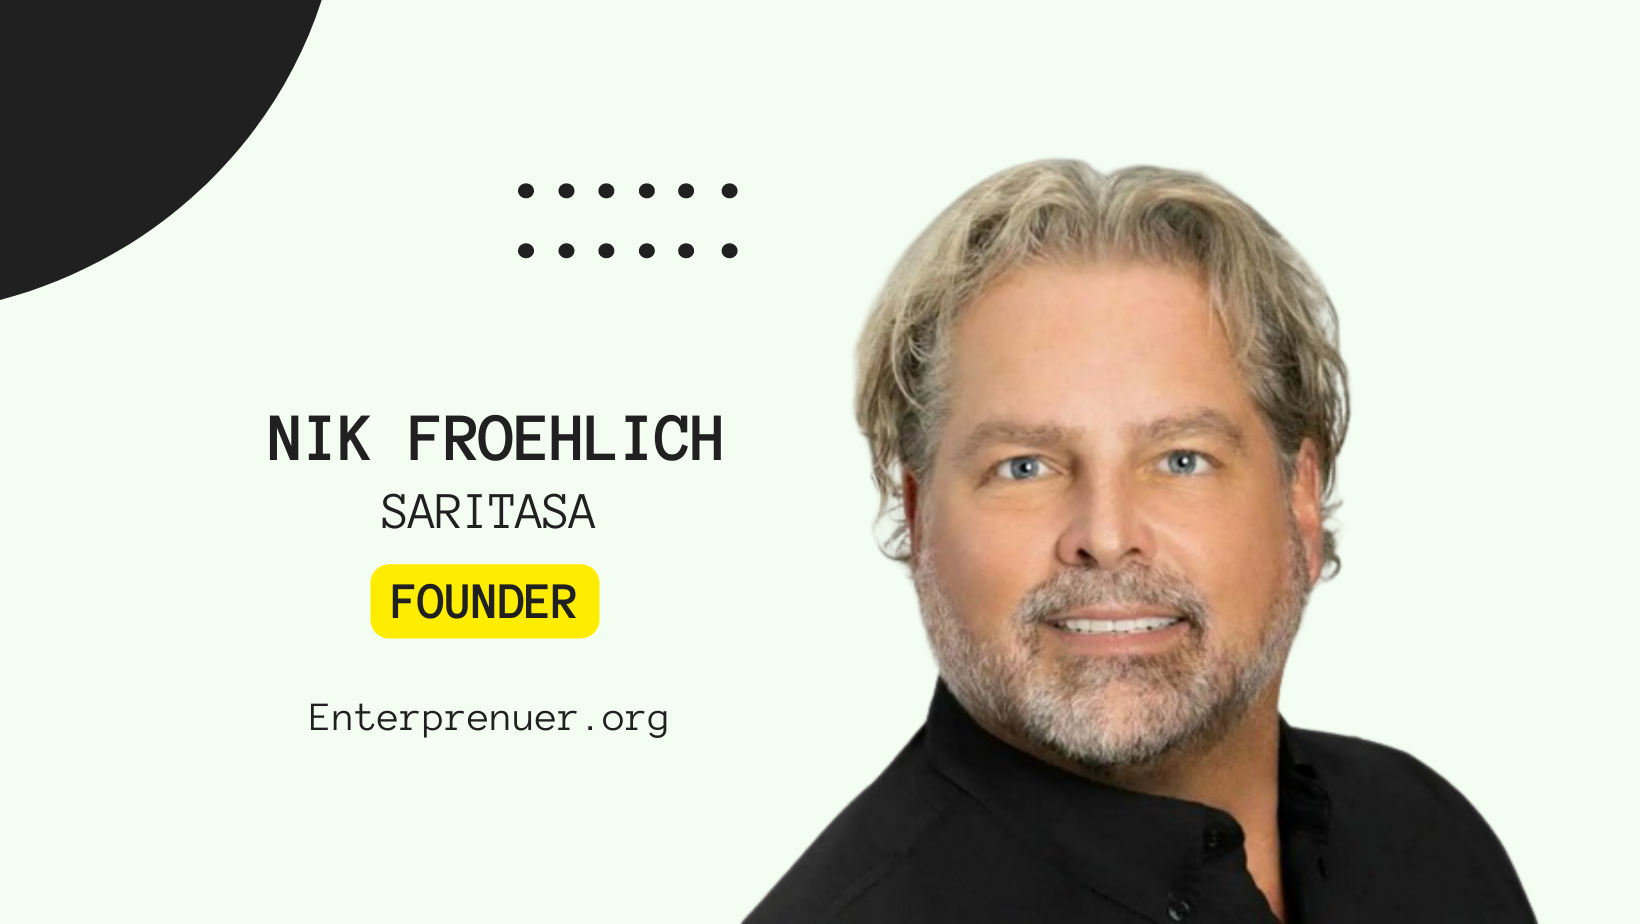 Meet Nik Froehlich Founder of Saritasa